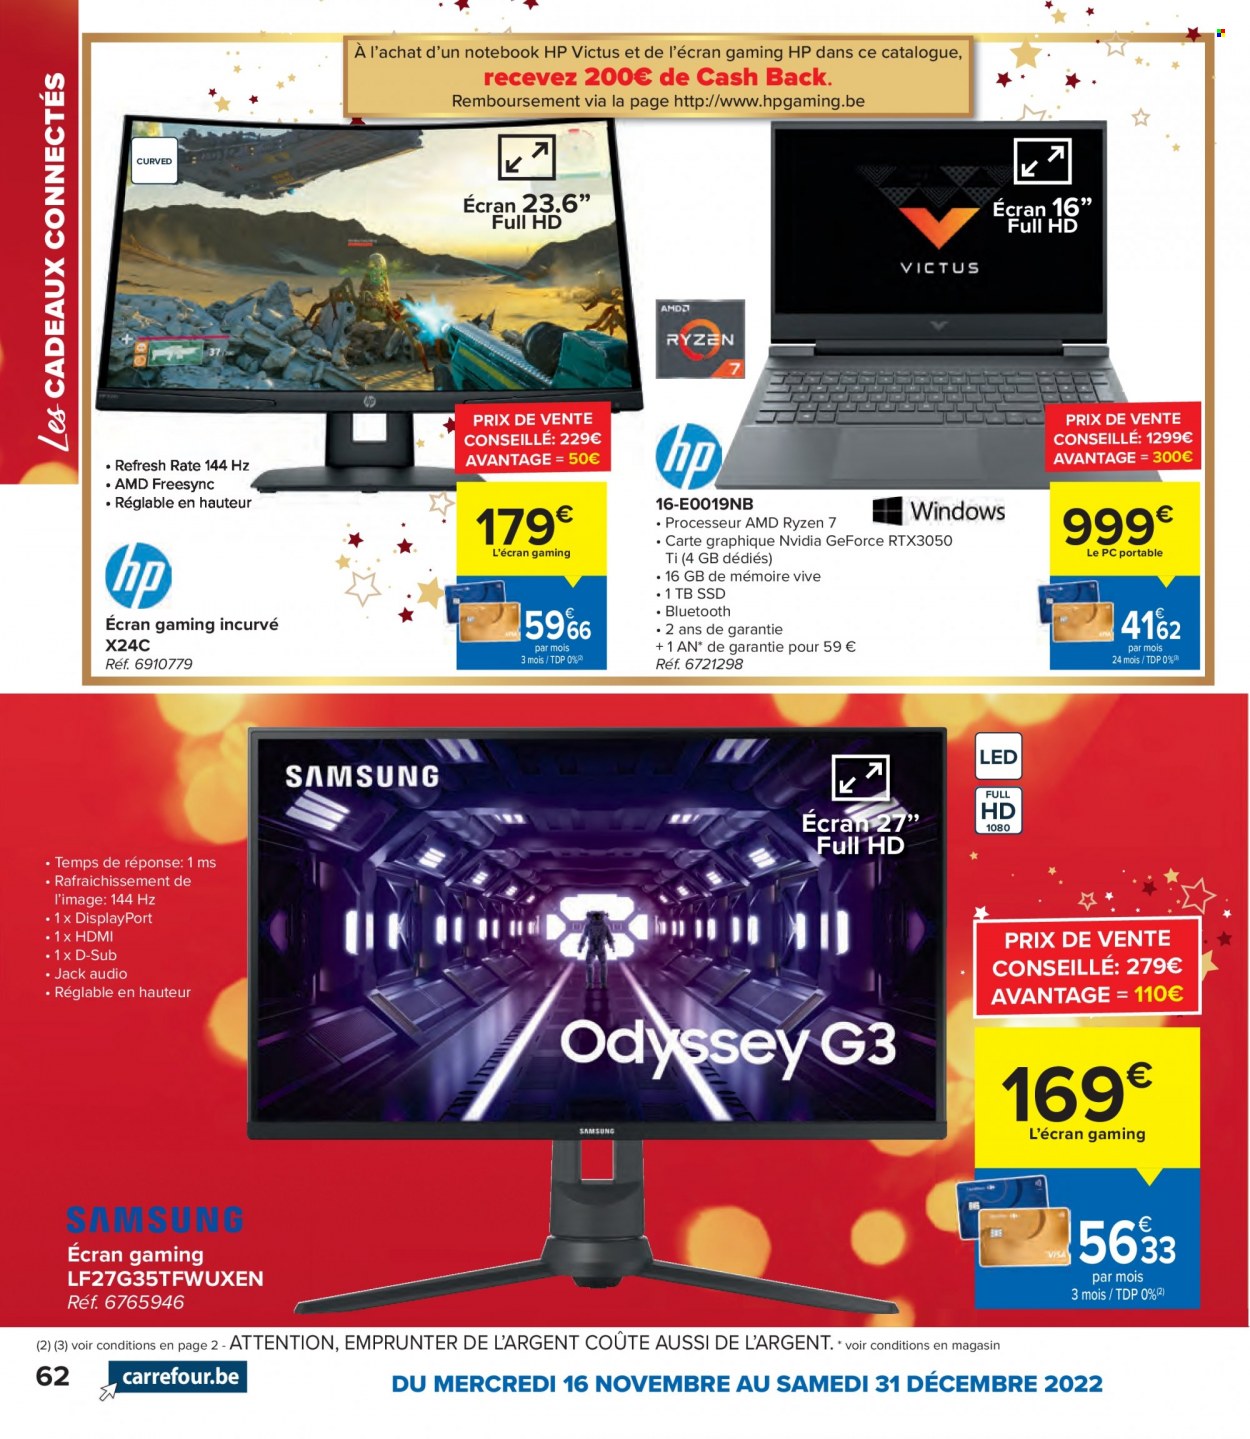 thumbnail - Carrefour hypermarkt-aanbieding - 16/11/2022 - 31/12/2022 -  producten in de aanbieding - HP, nVidia, GeForce, SSD, HDMI, full hd, computer. Pagina 62.